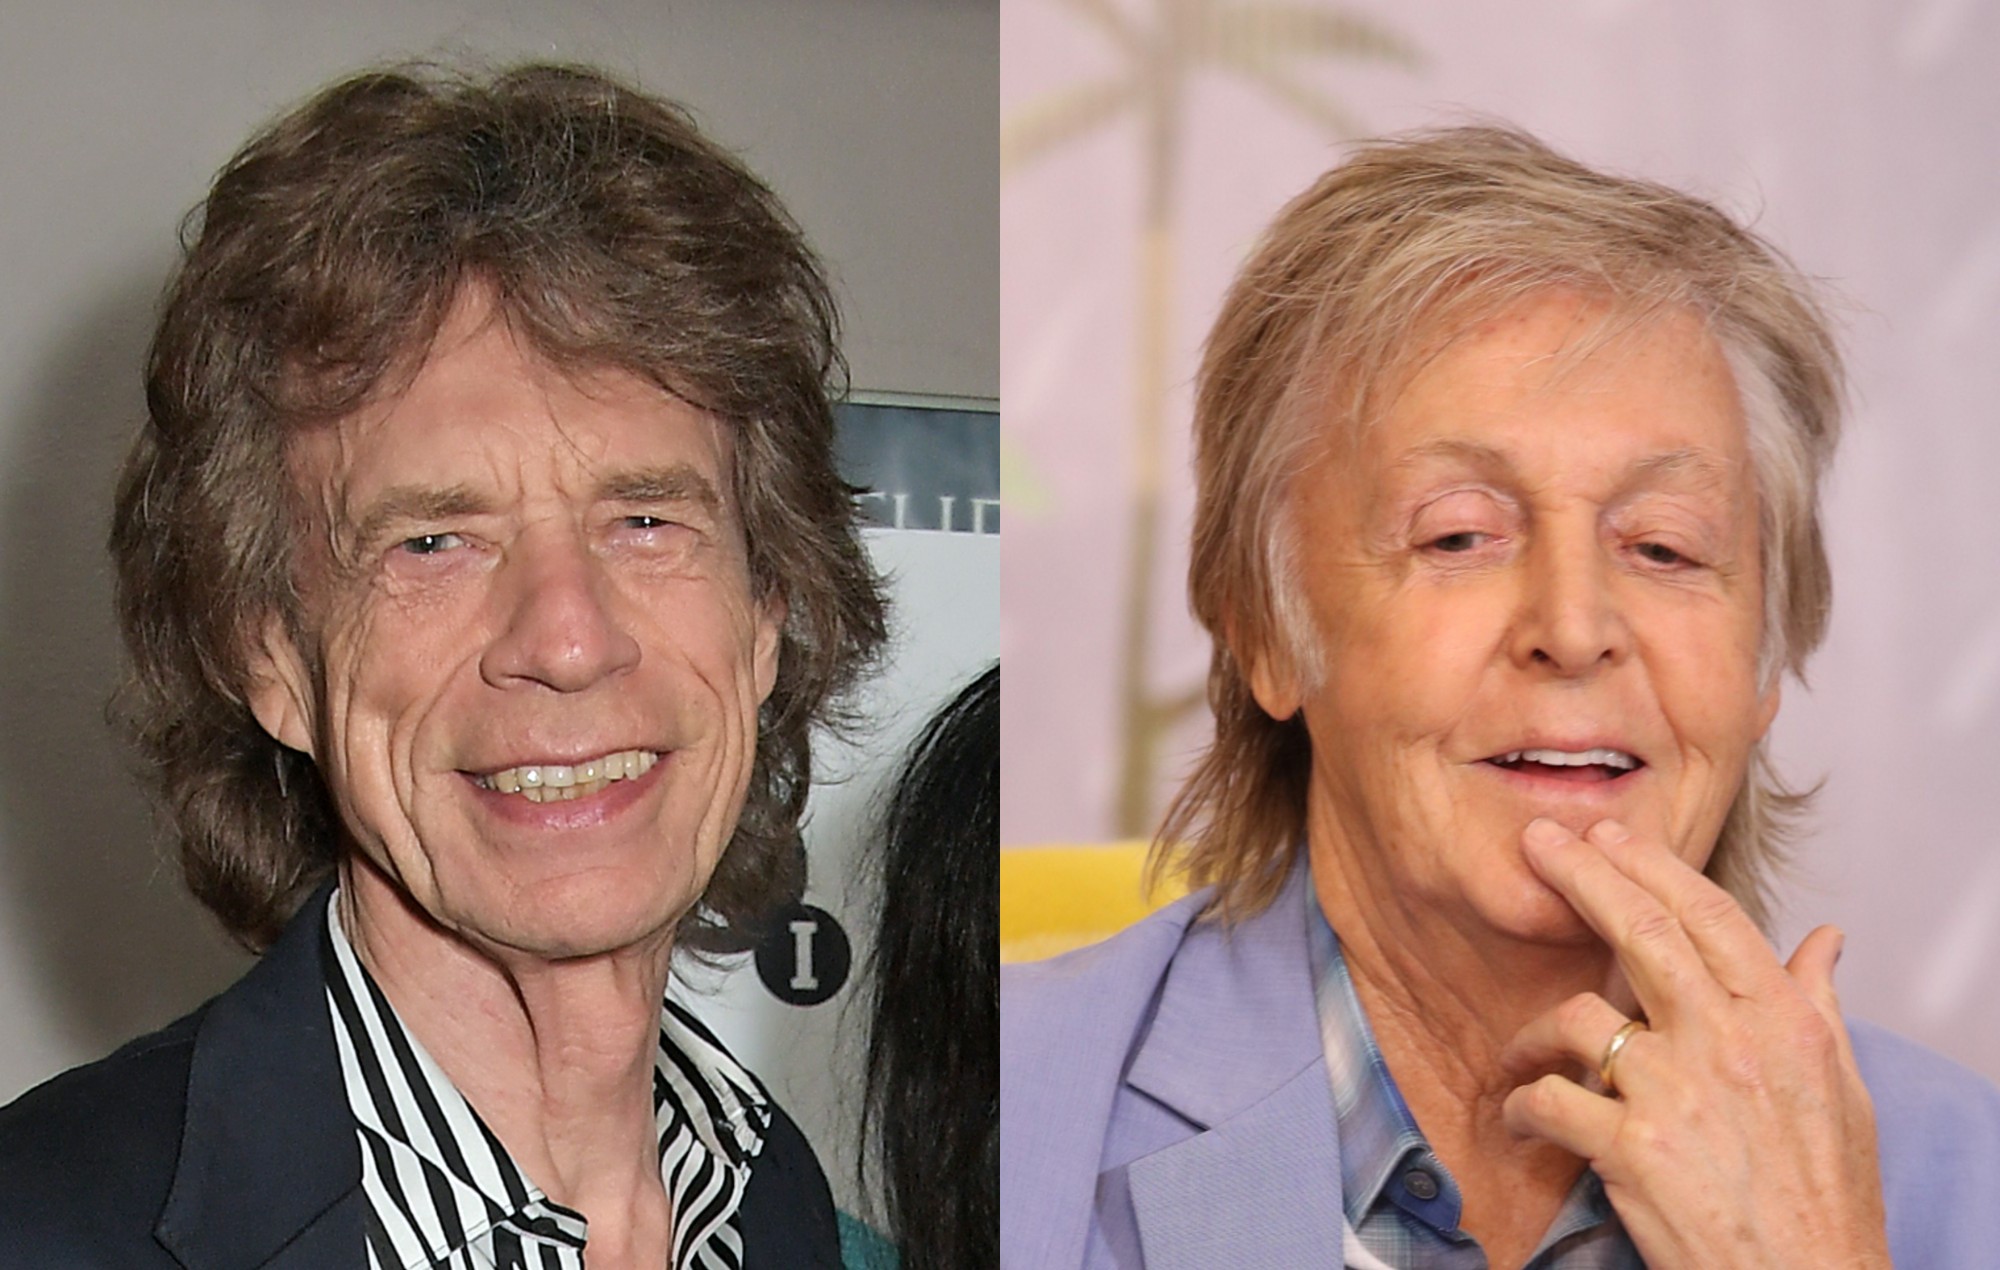 Paul McCartney Mick Jagger